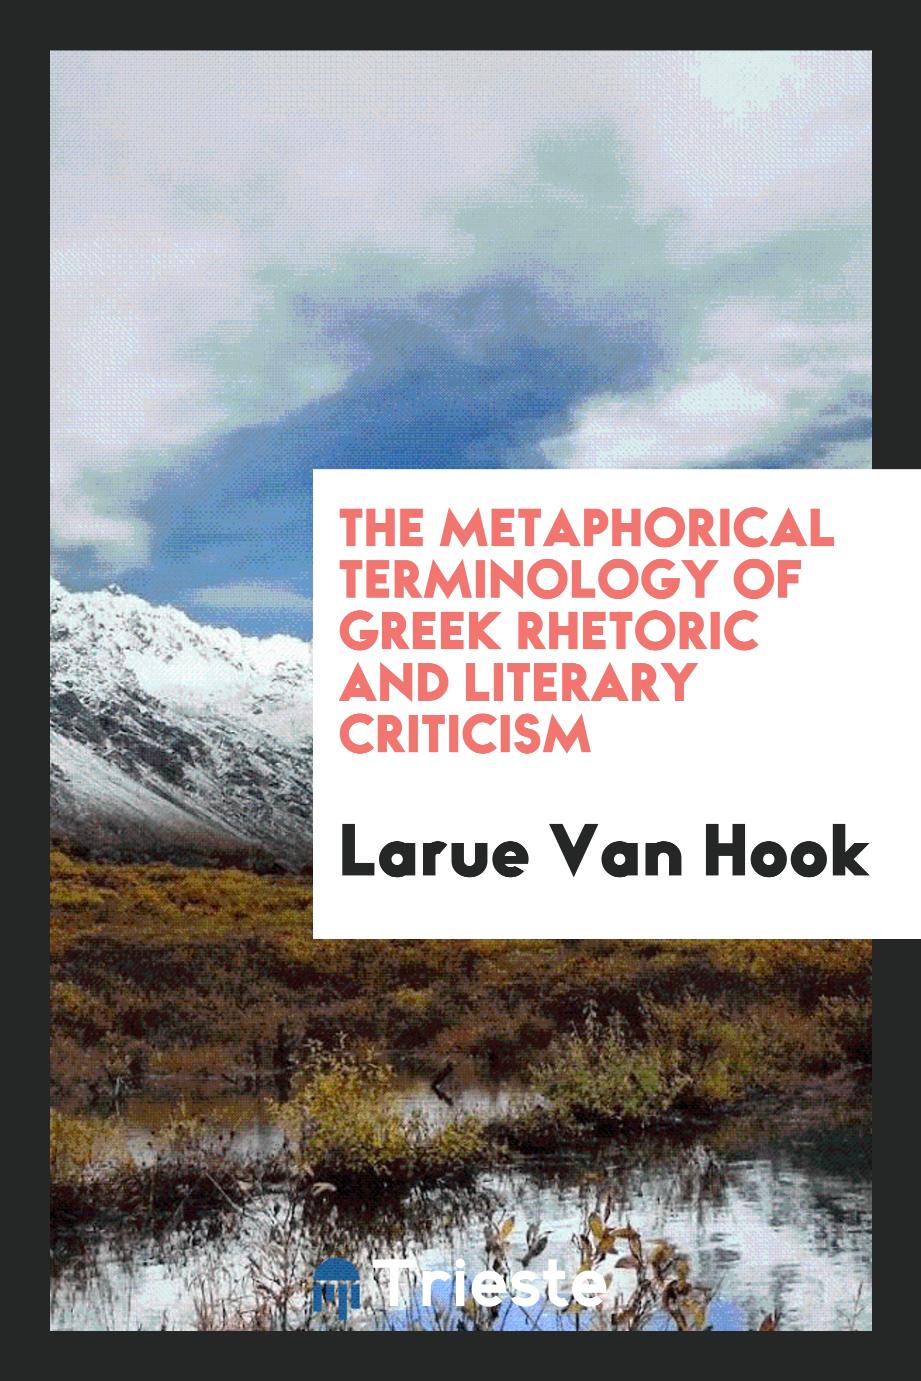 The metaphorical terminology of Greek rhetoric and literary criticism